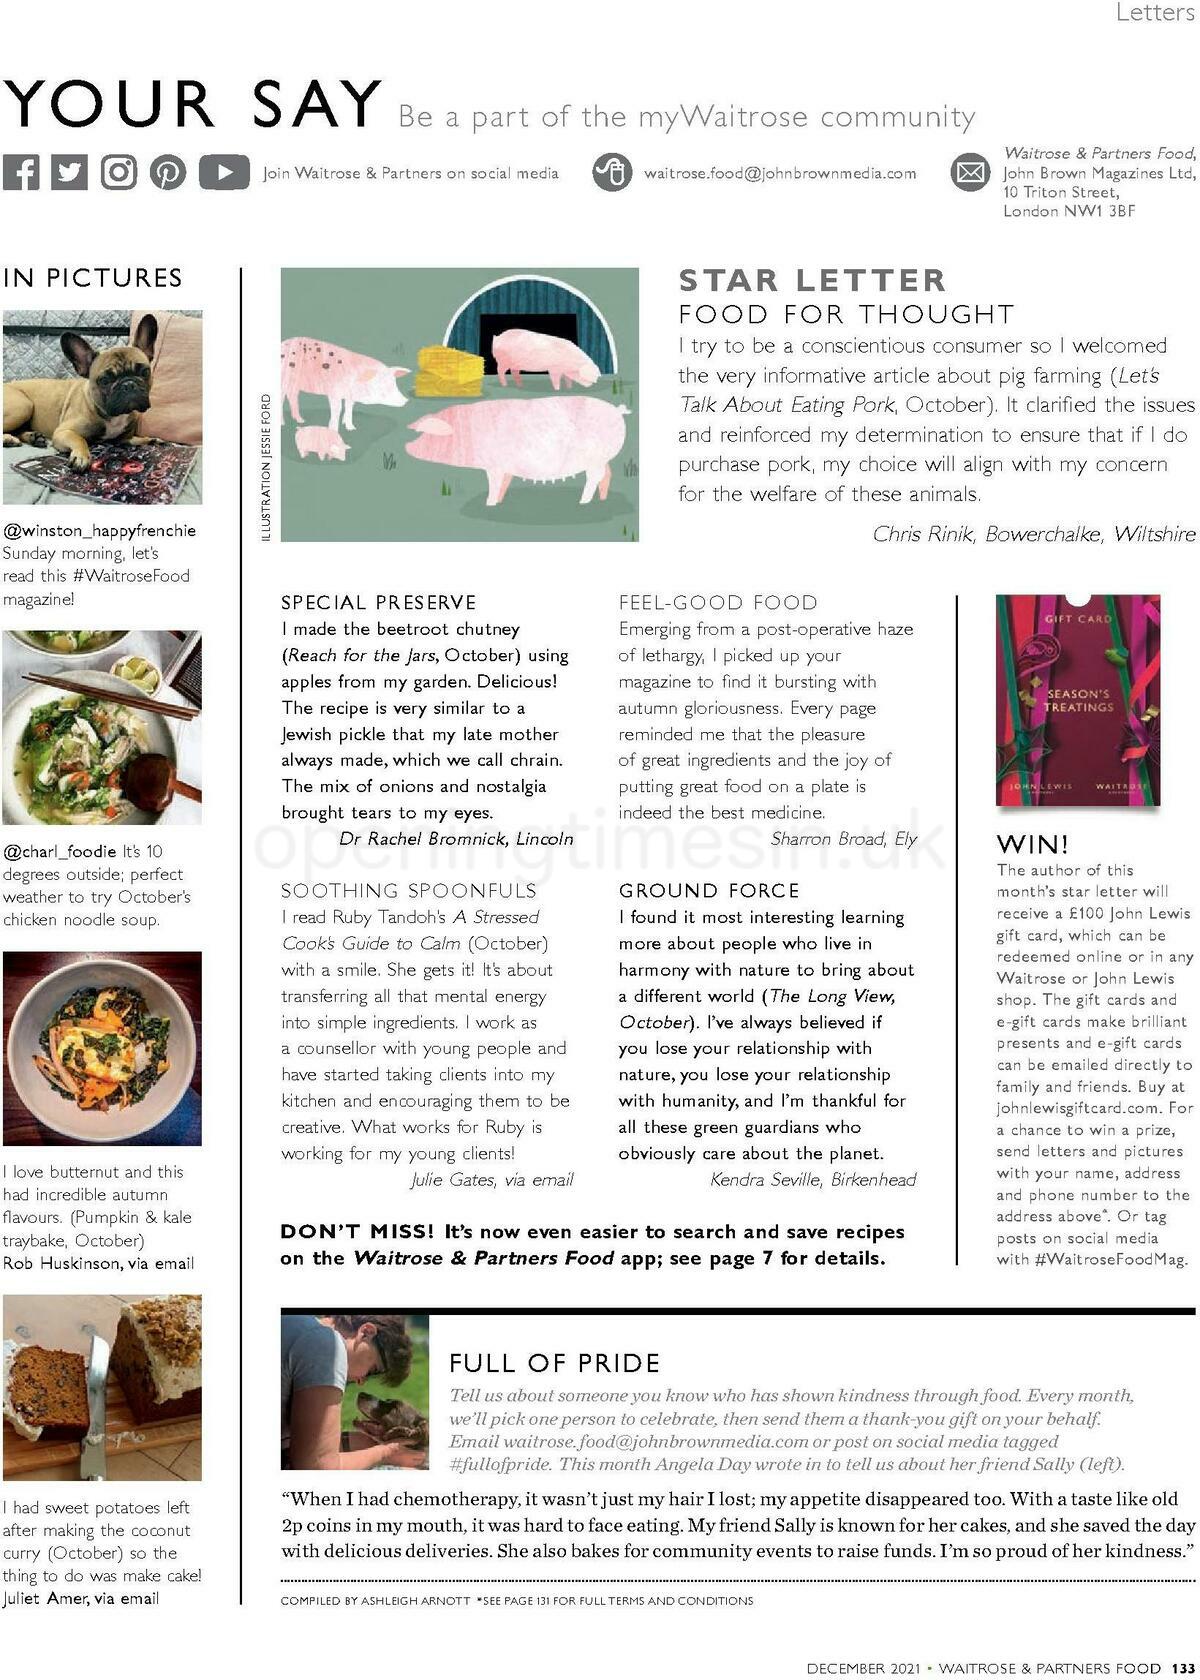 Waitrose Food Magazine December Offers from 1 December